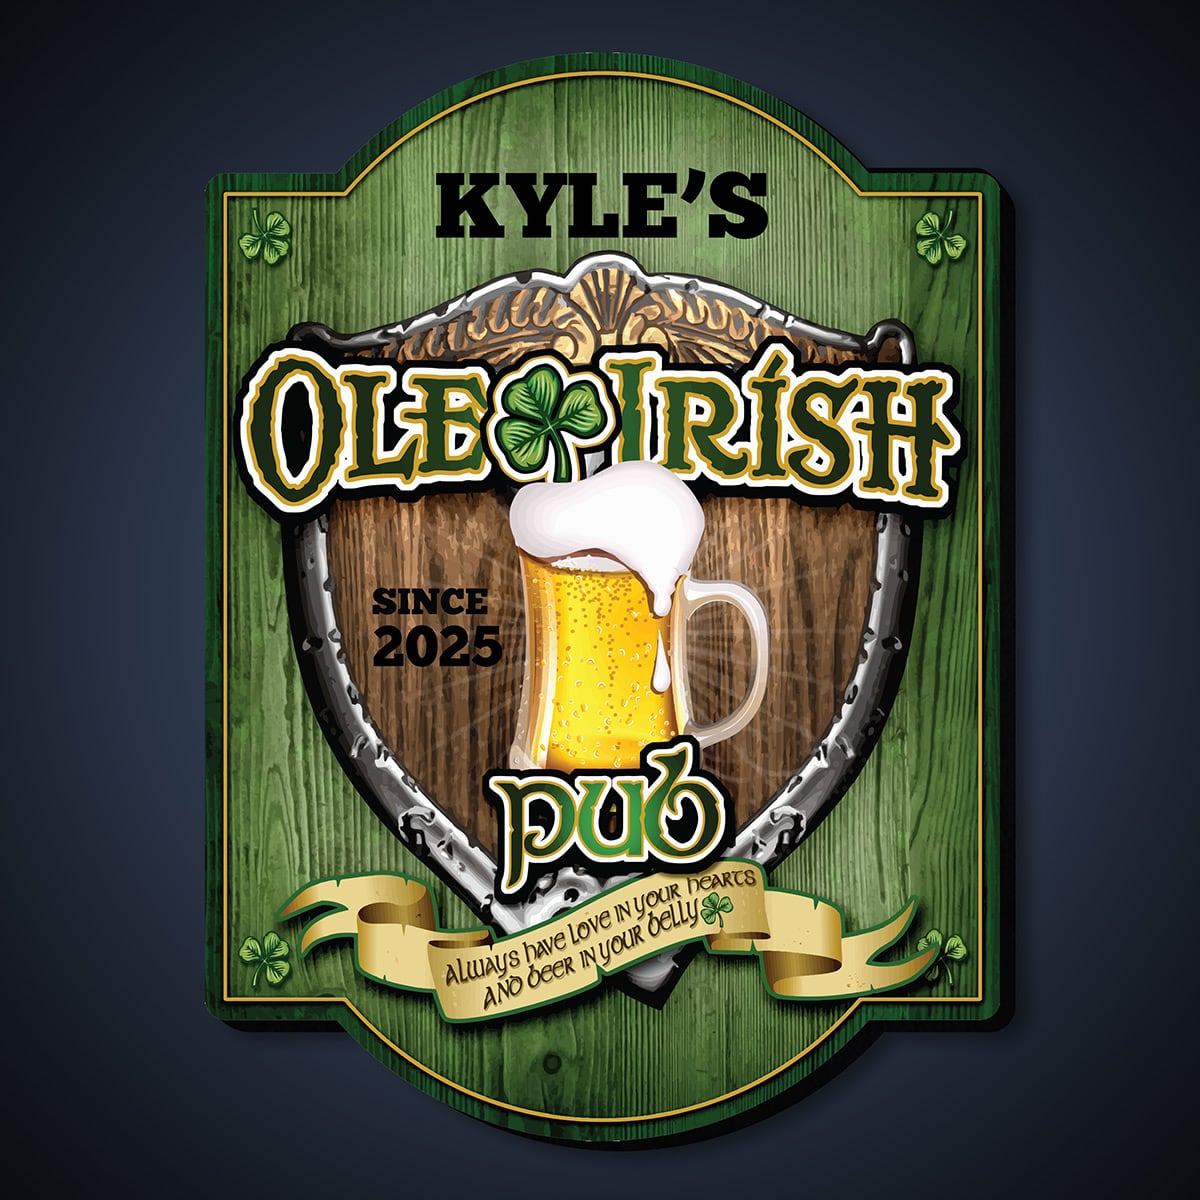 Ole Irish Personalized Pub Sign